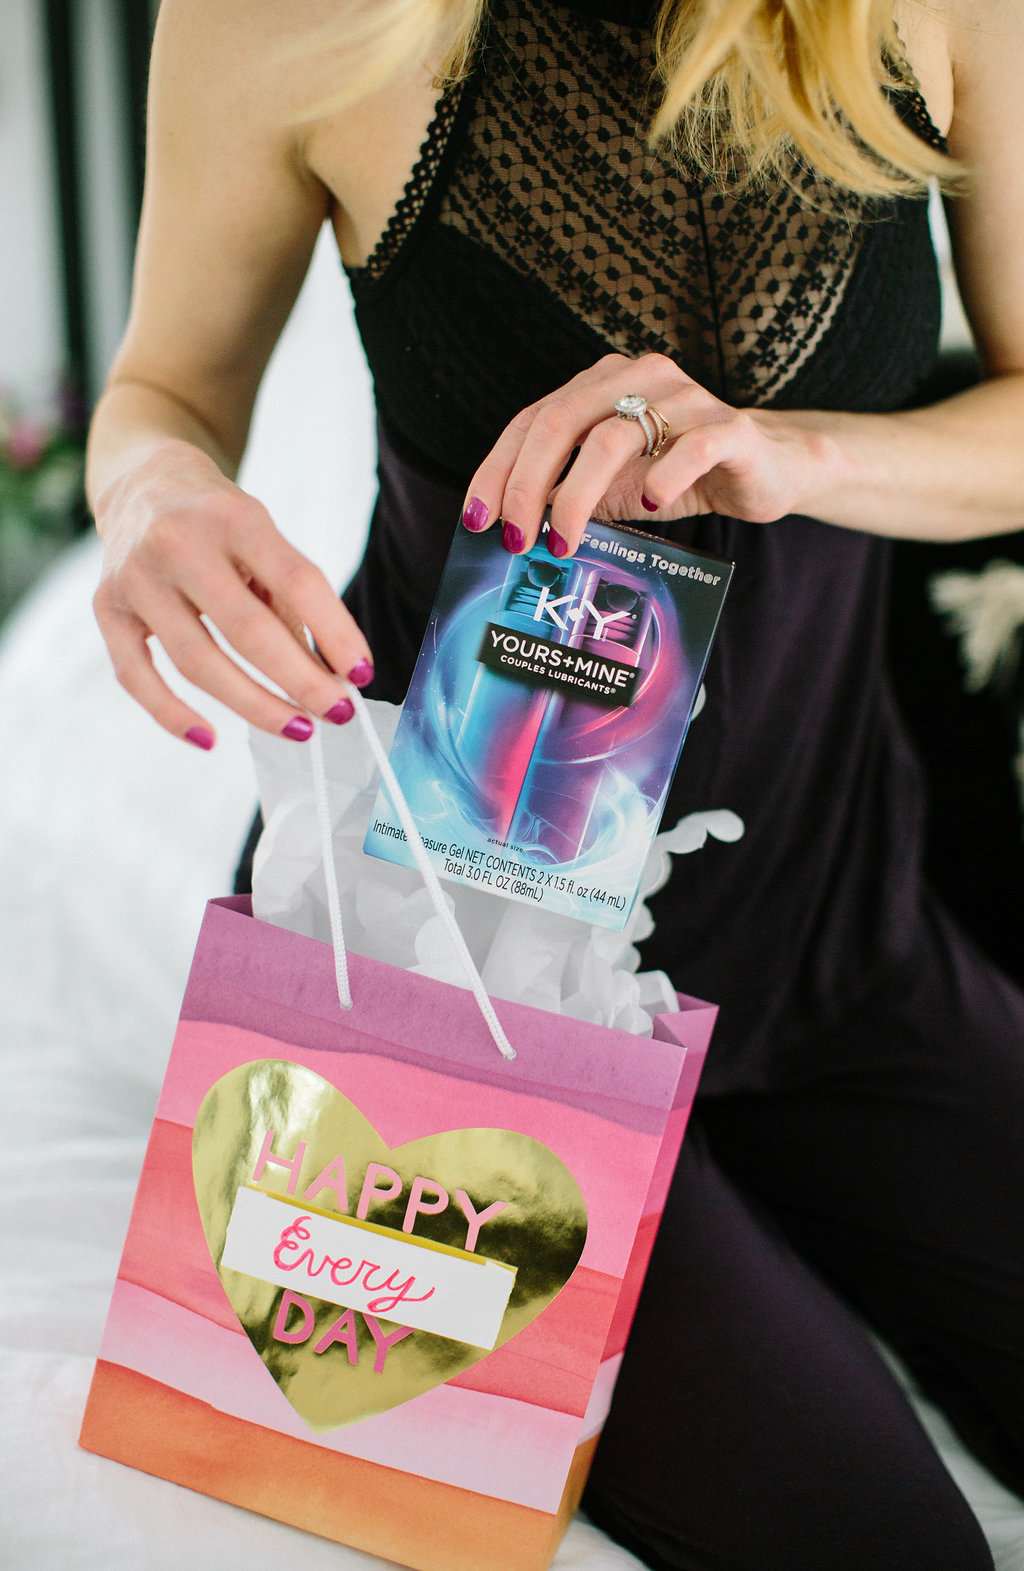 Eva Amurri Martino puts a box of K-Y lubricant in to a Valentine's Day gift bag